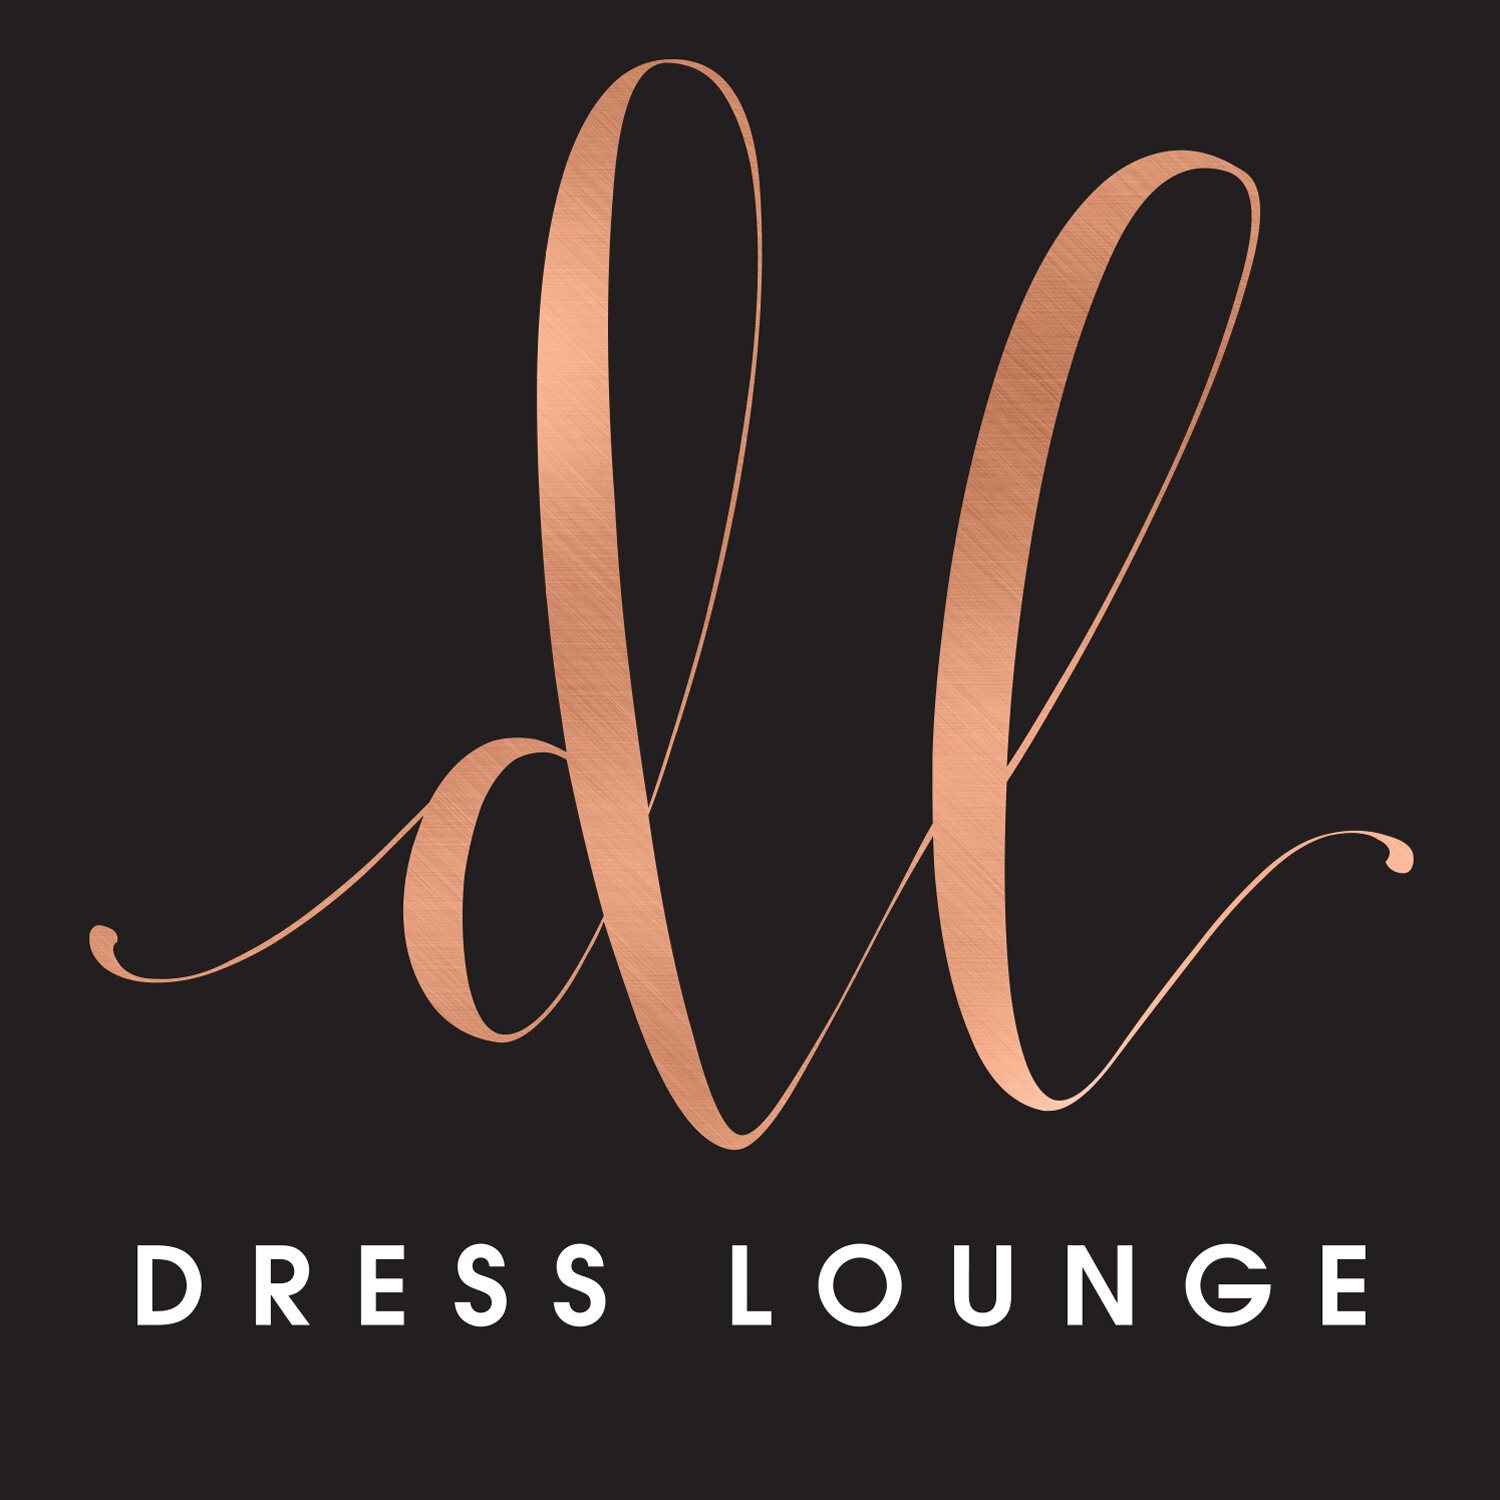 The Dress Lounge